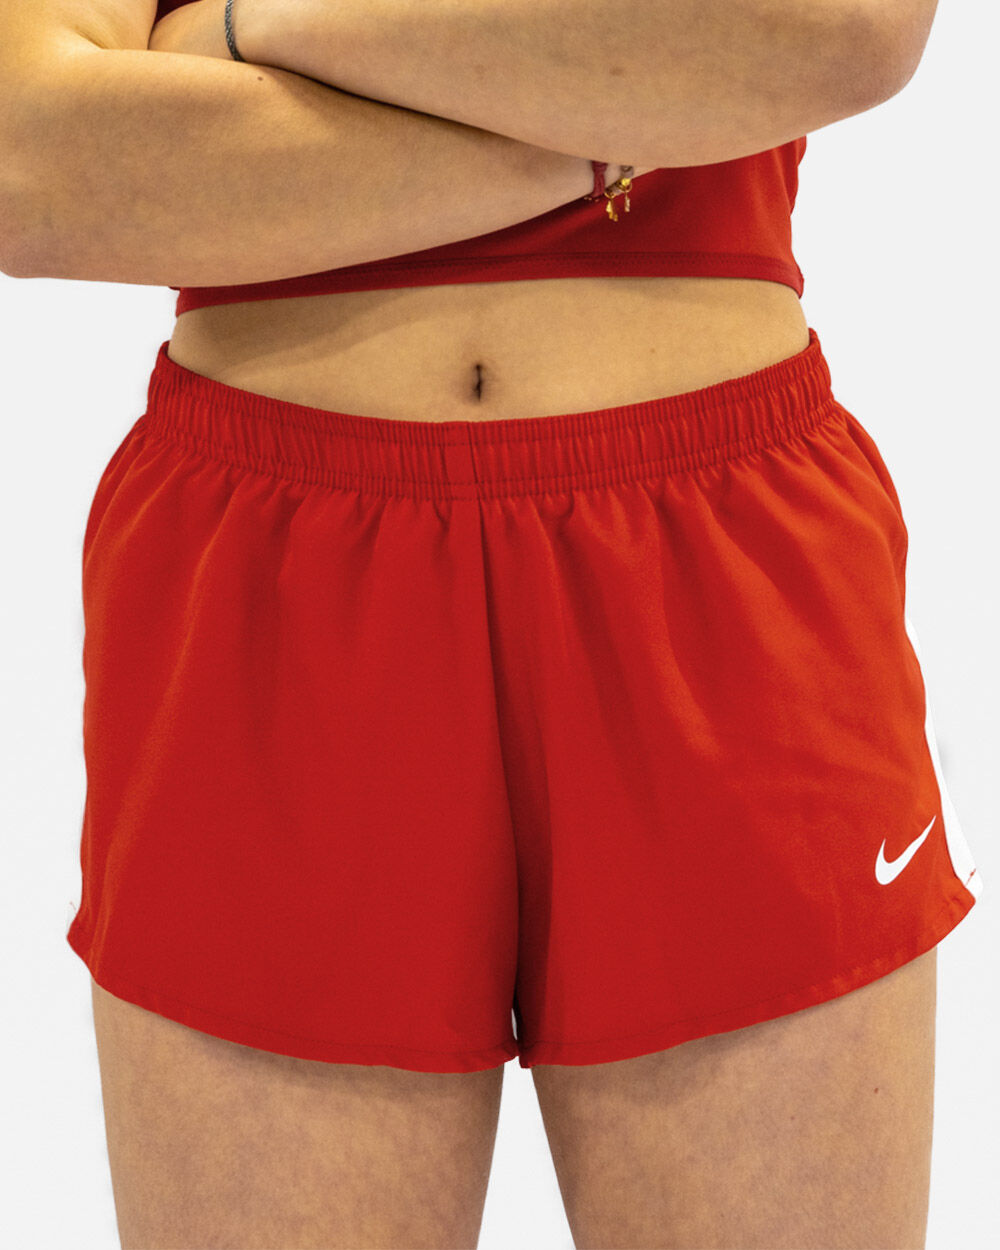 Pantalón corto para correr Nike Stock Rojo Mujeres - NT0304-657